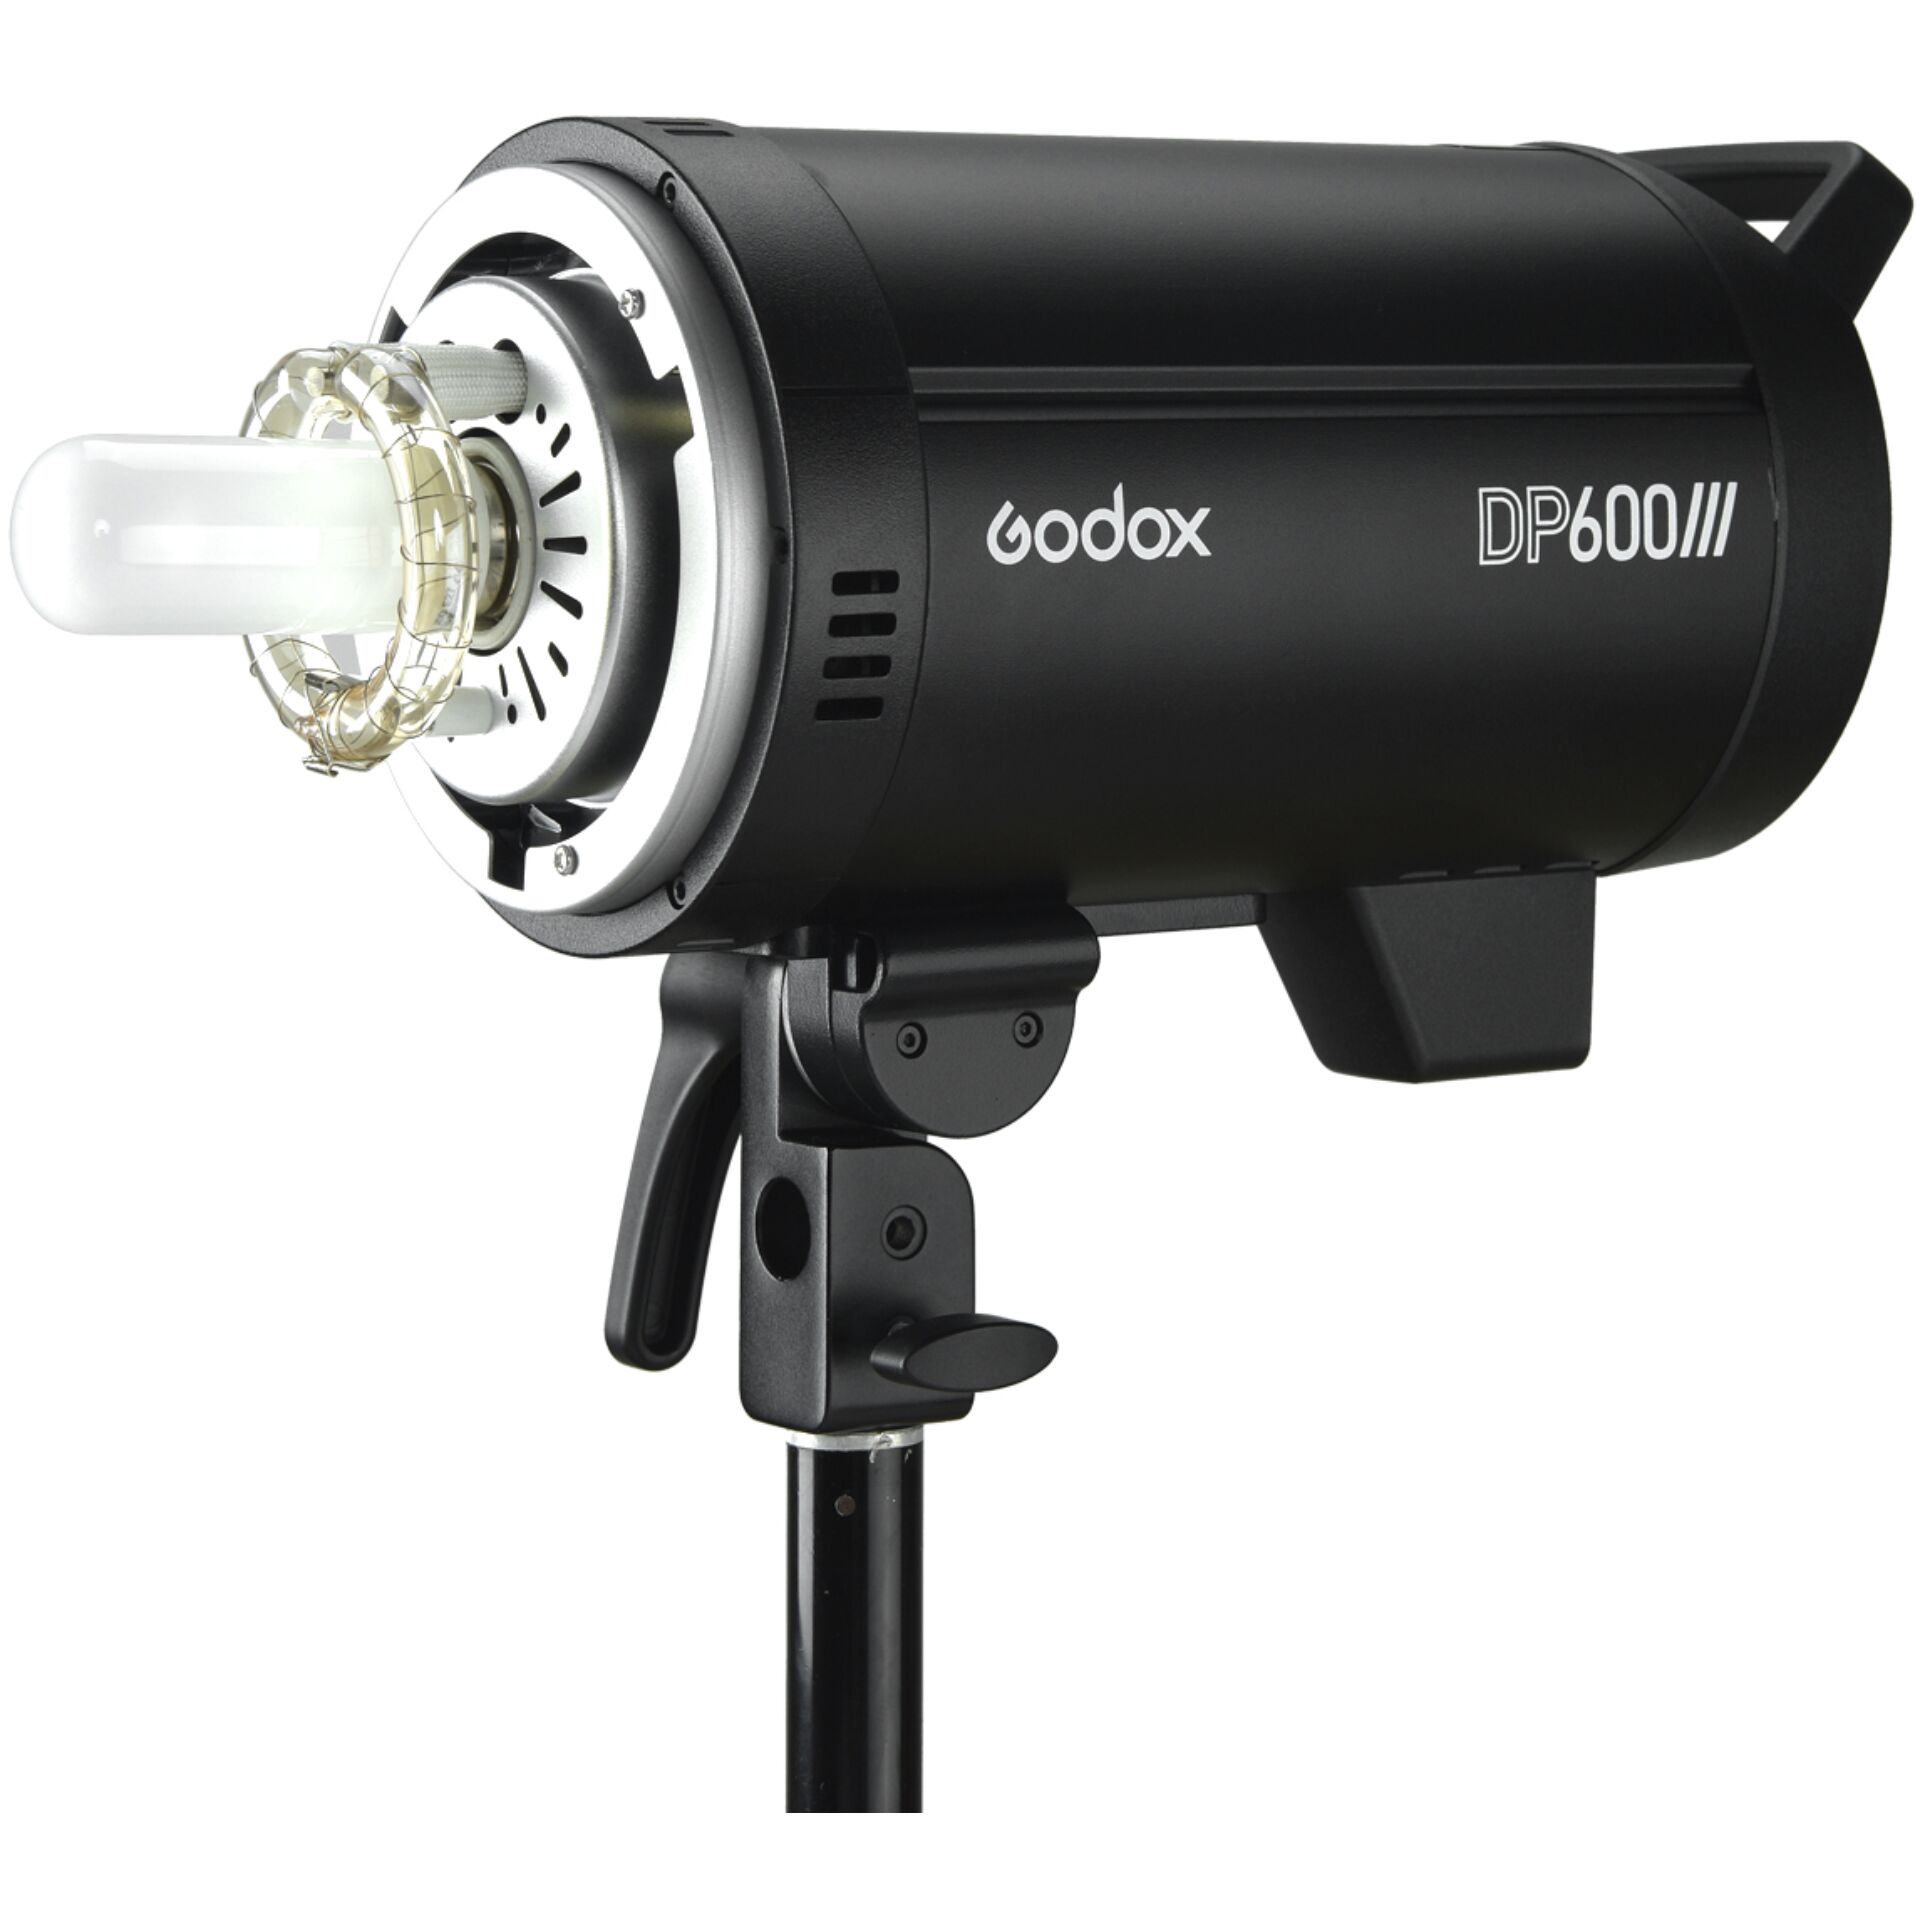 Godox DP600 III Studio Flash